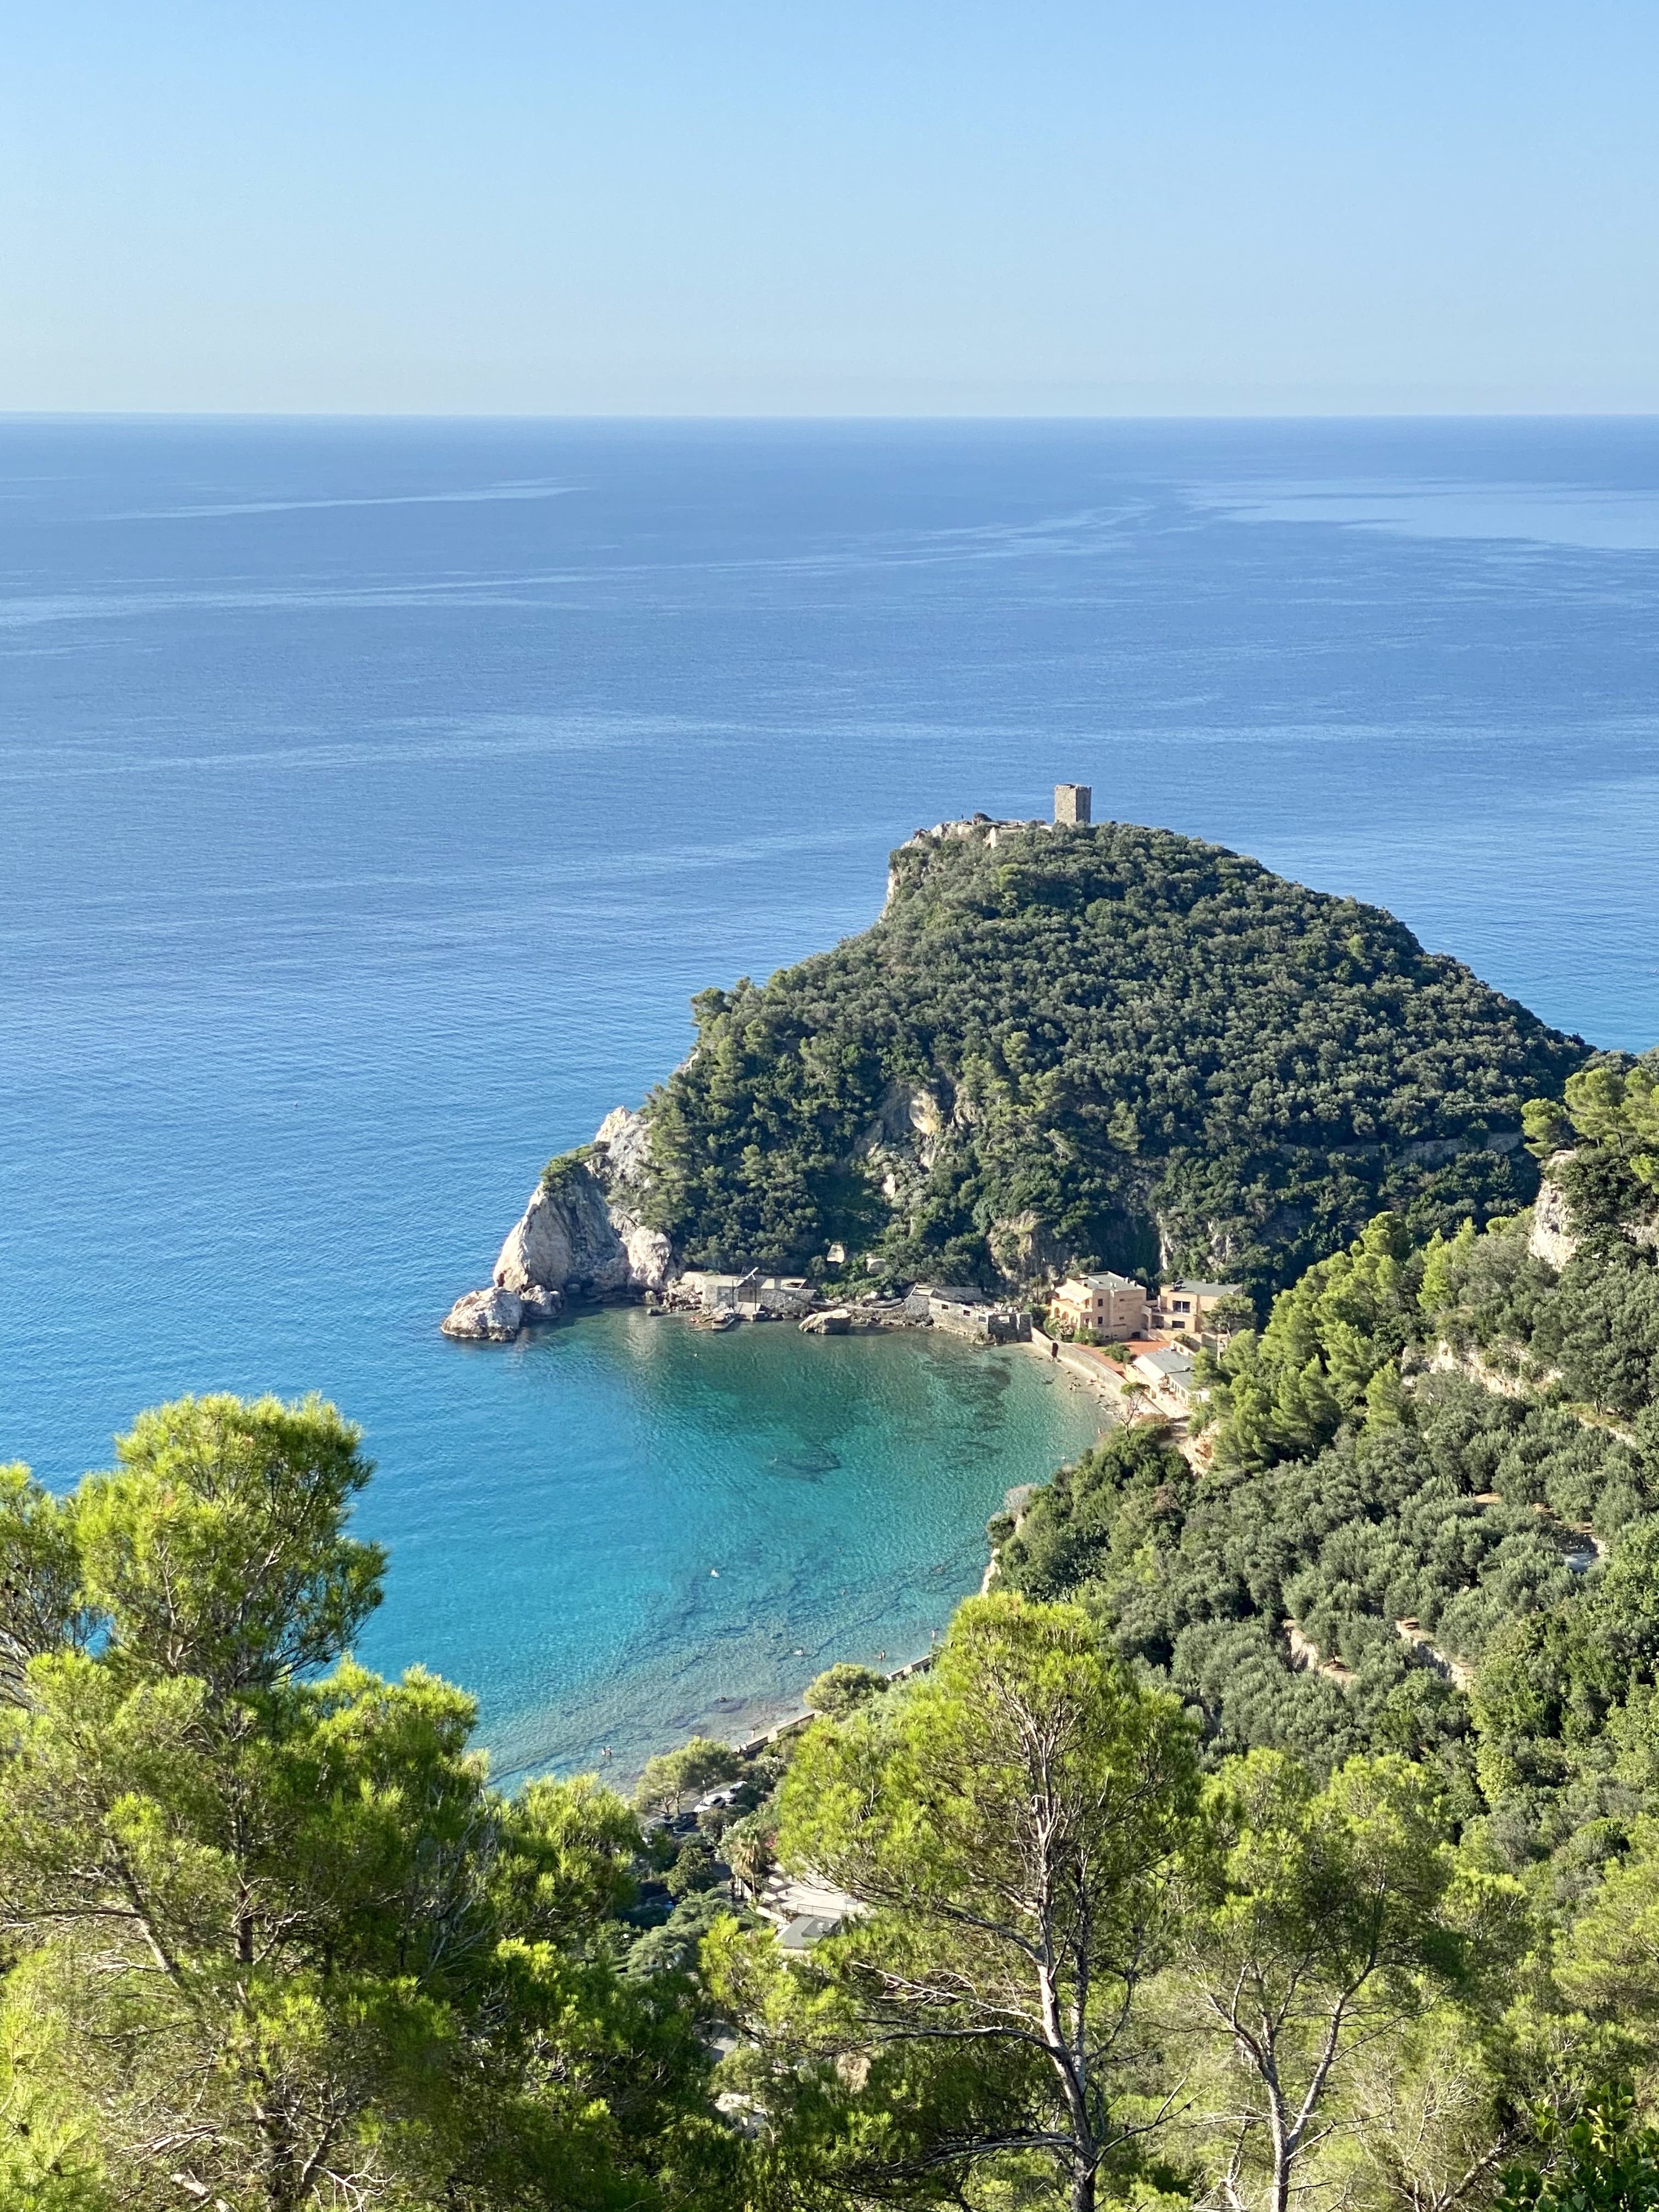 The Ligurian coast